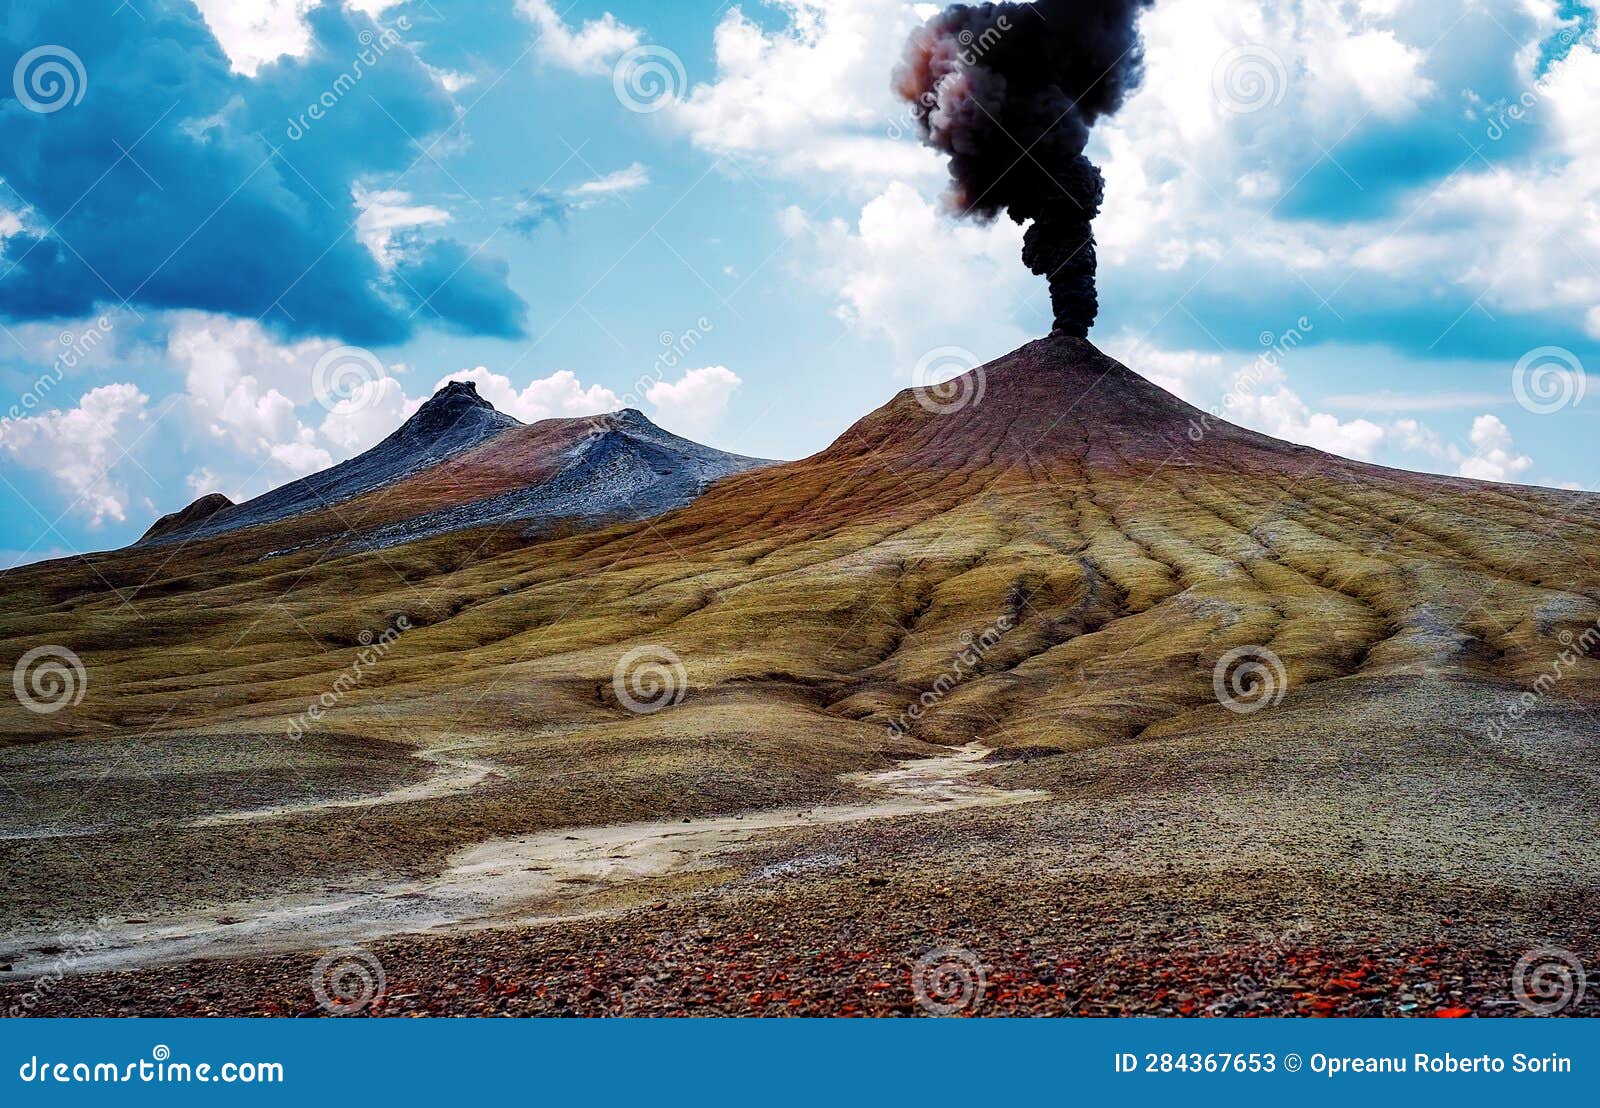 mud volcanoes. with smoke eruption